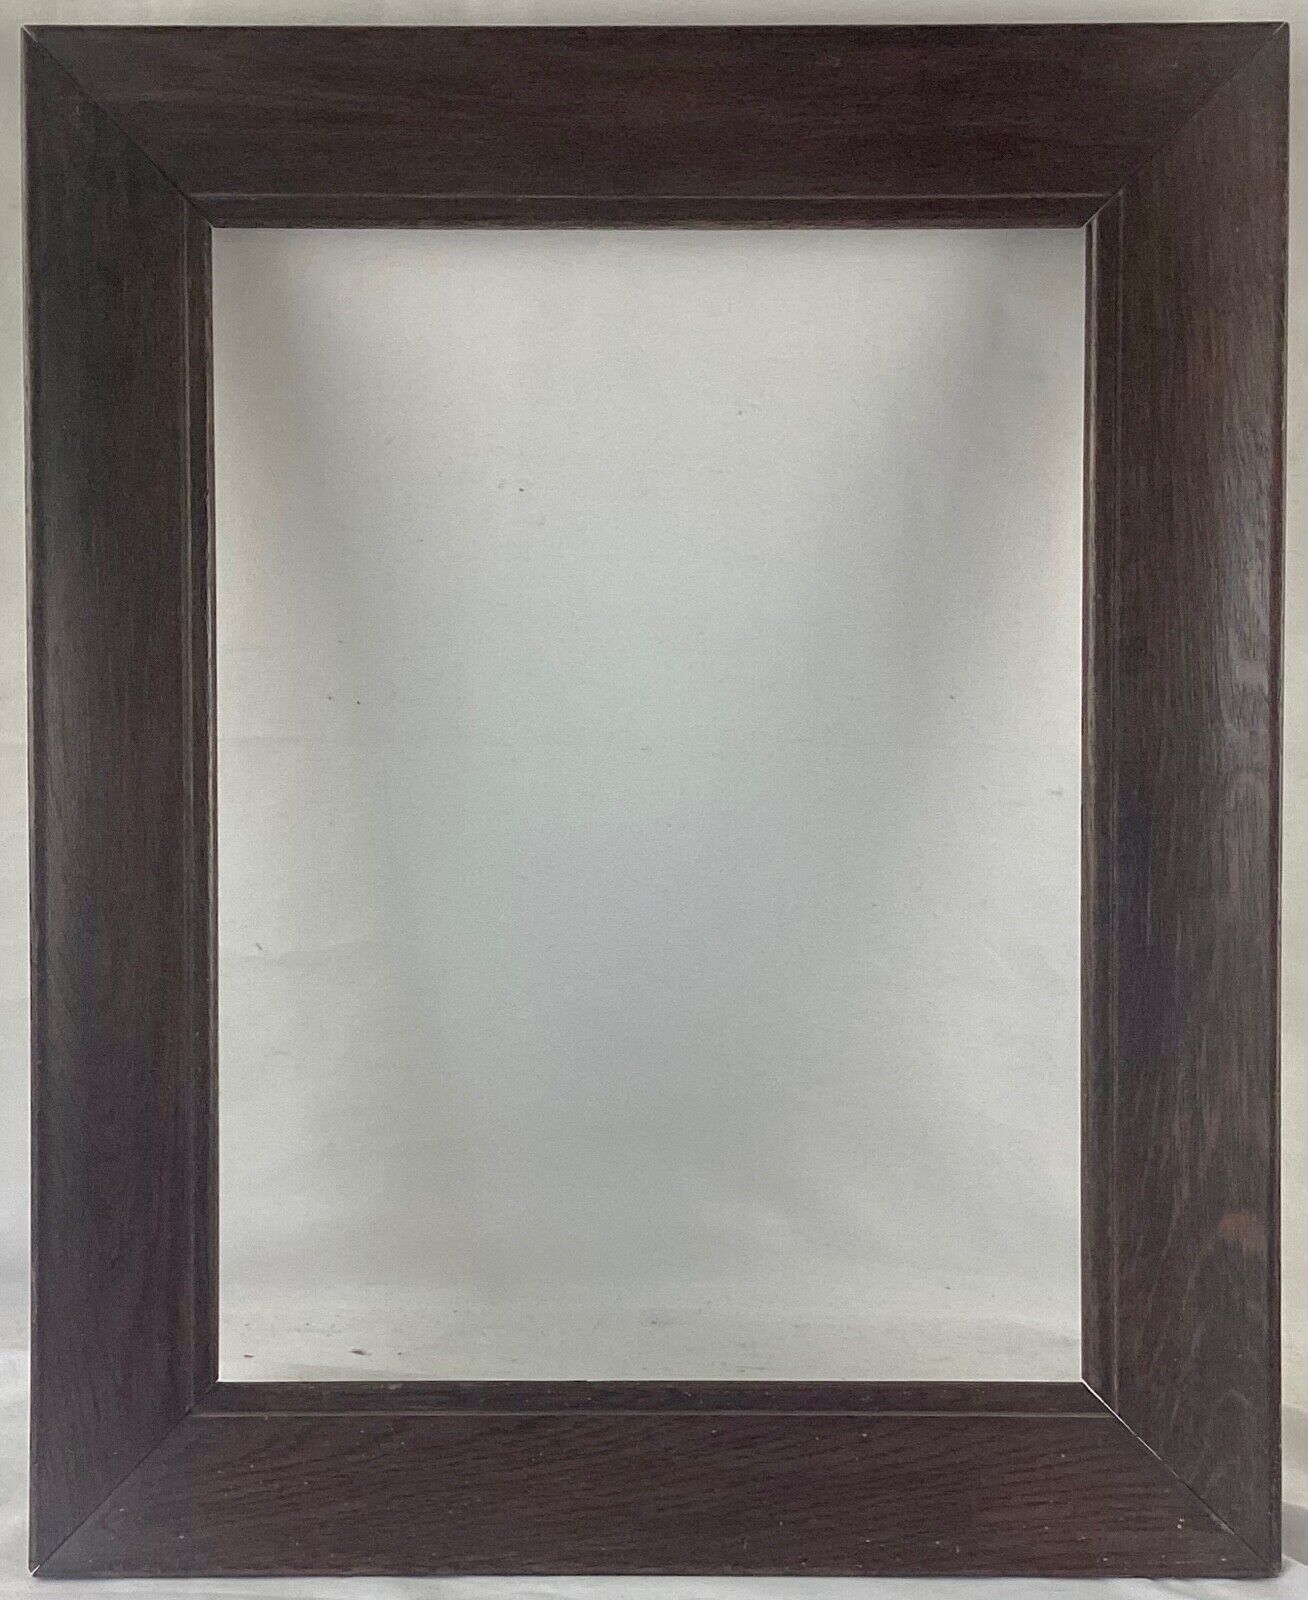 Antique Frame Wood Vintage Profilrahmen Oak Rebate Size 16 13/16x12 13/16in